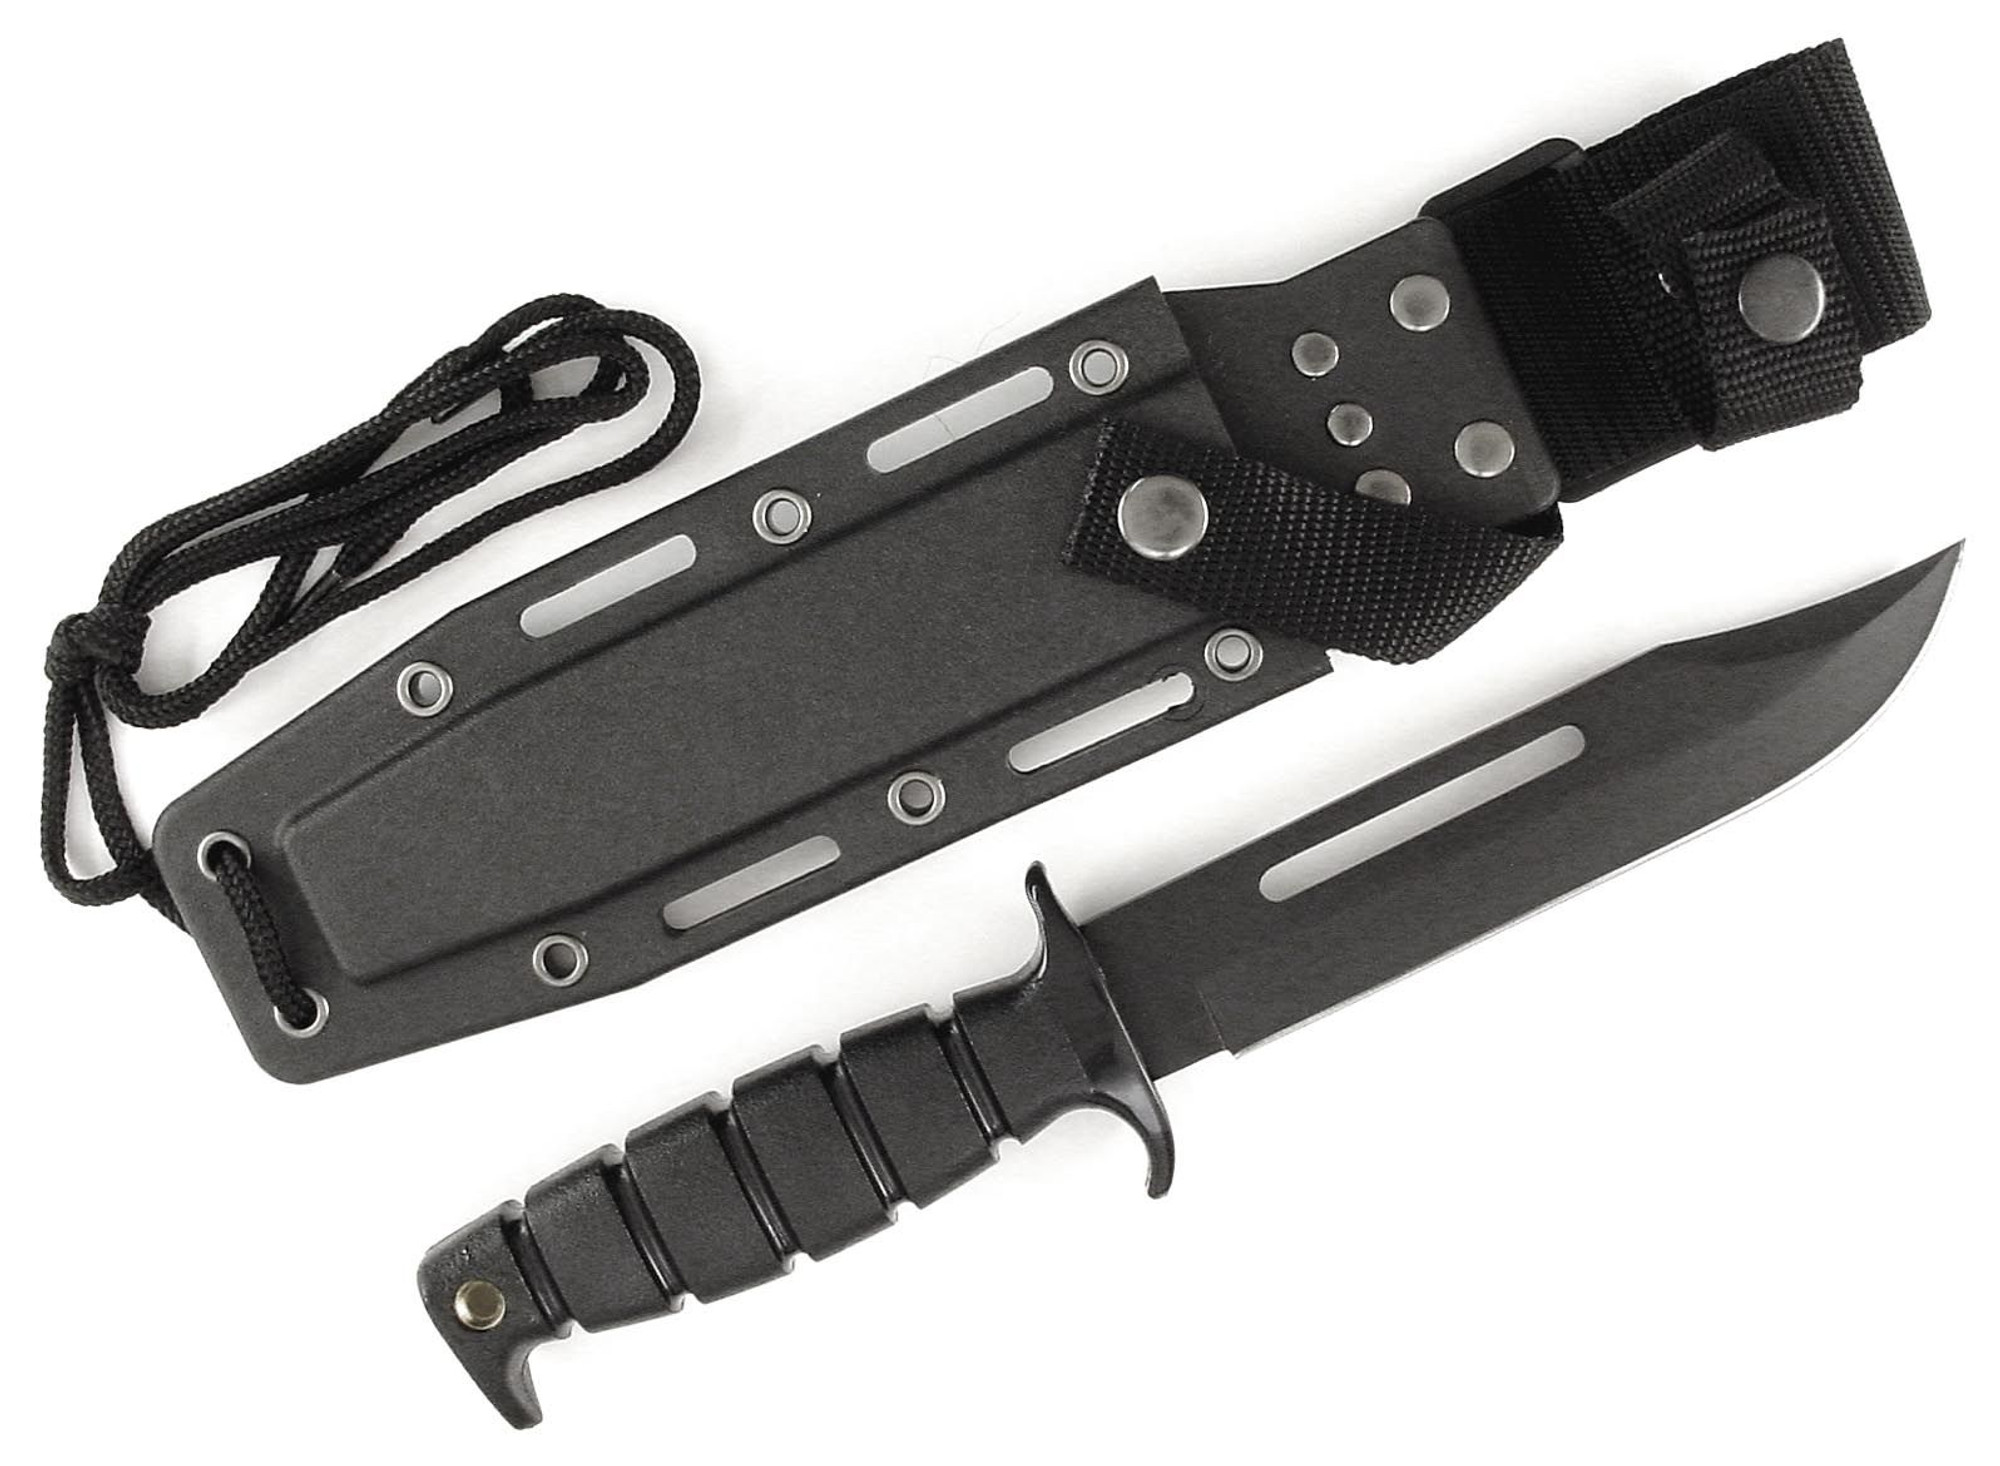 RUKO K1061A, S45C, 6-3/4" Fixed Blade Combat Knife, Rubber Handle